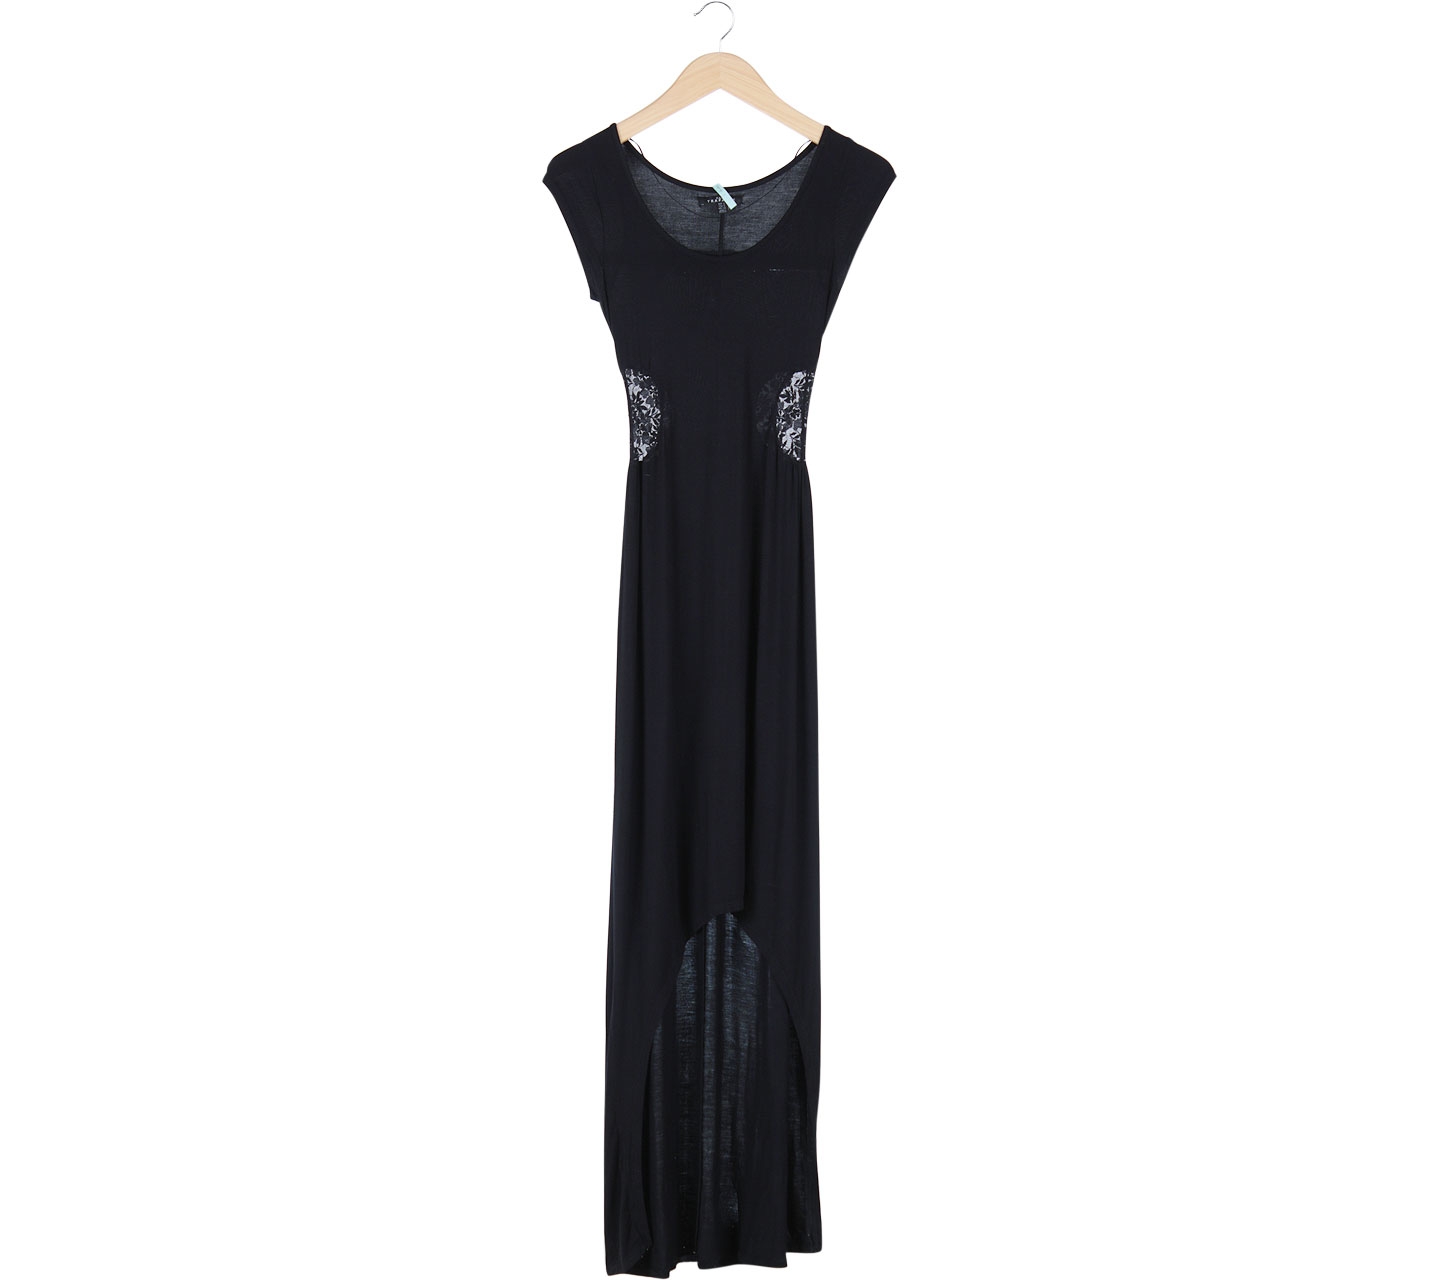 Zara Black Lace Insert Long Dress